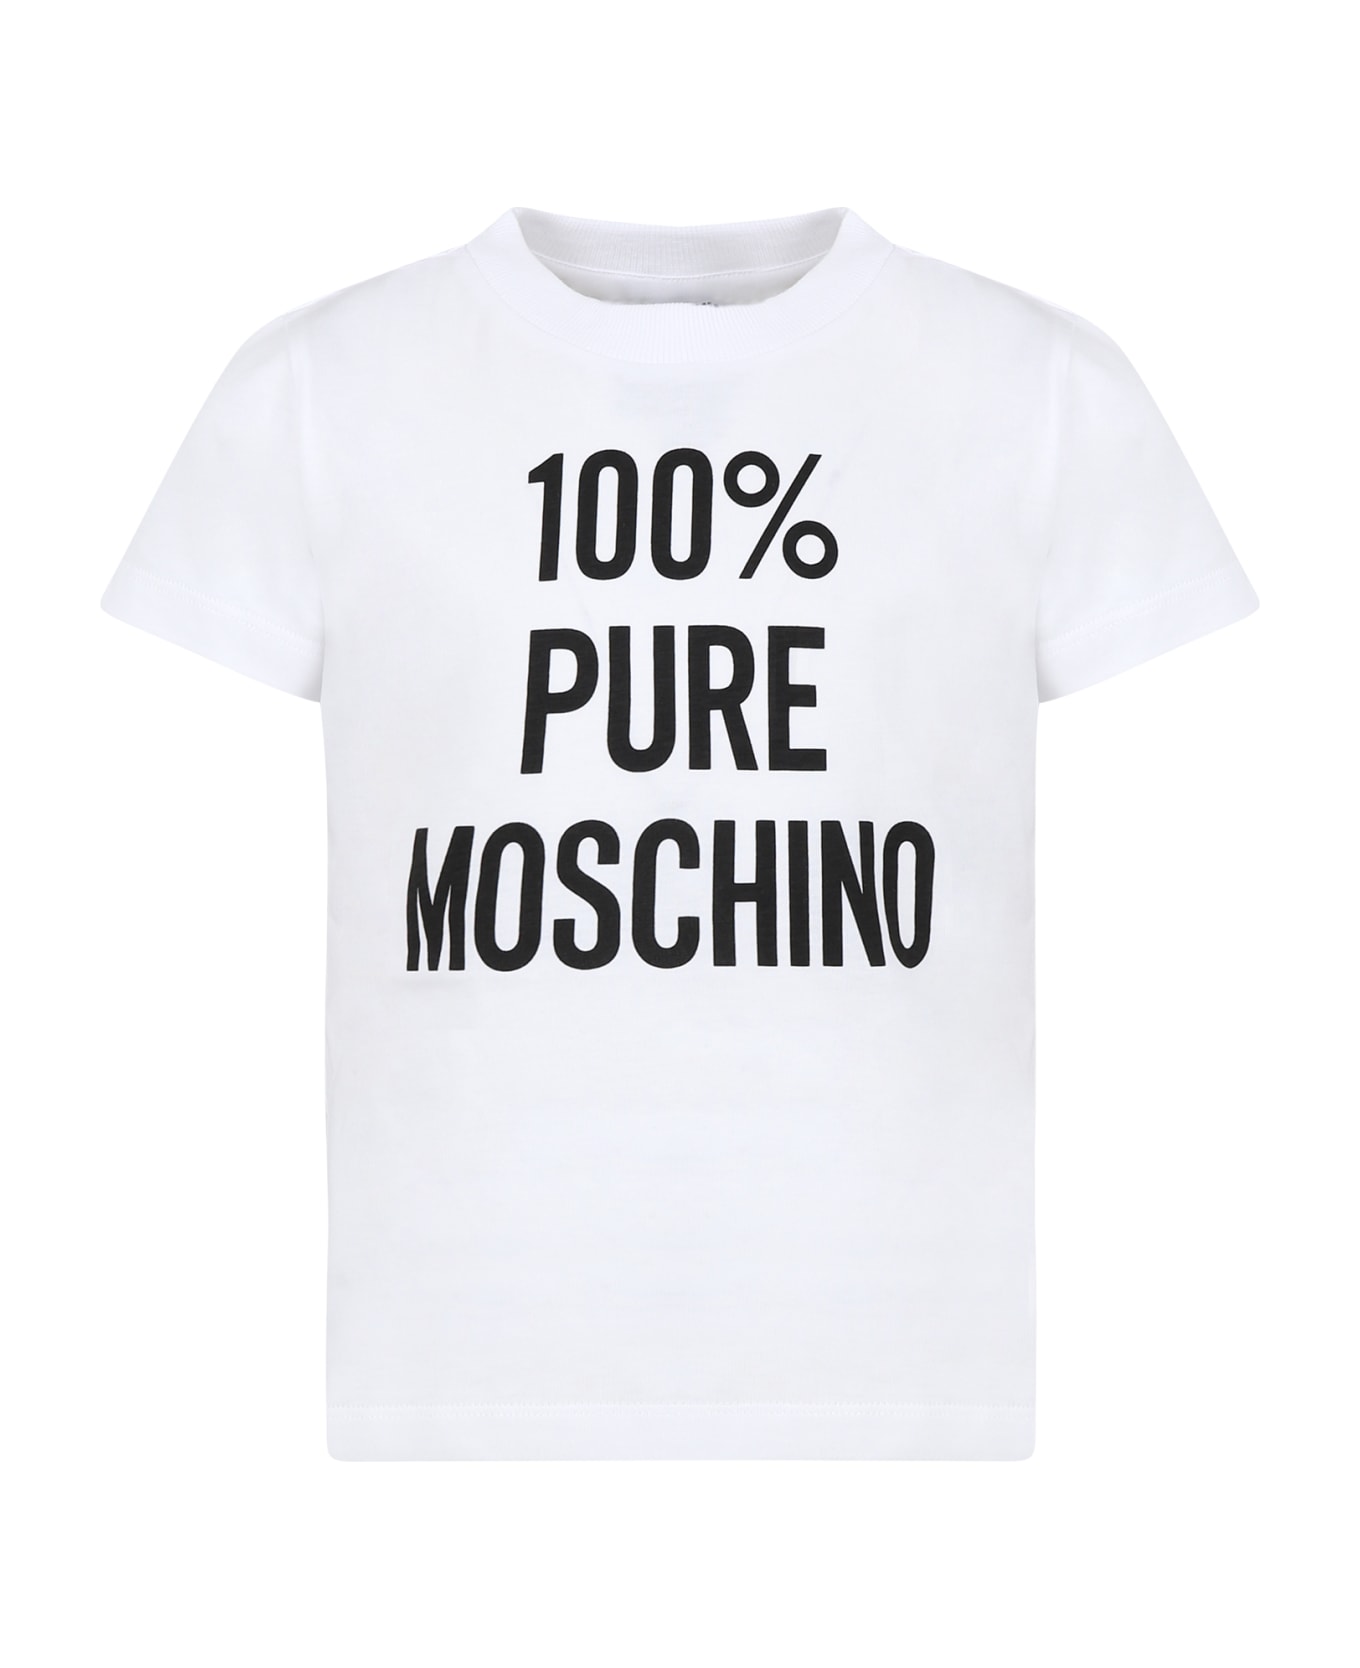 Moschino White T-shirt For Kids With Black Print - White